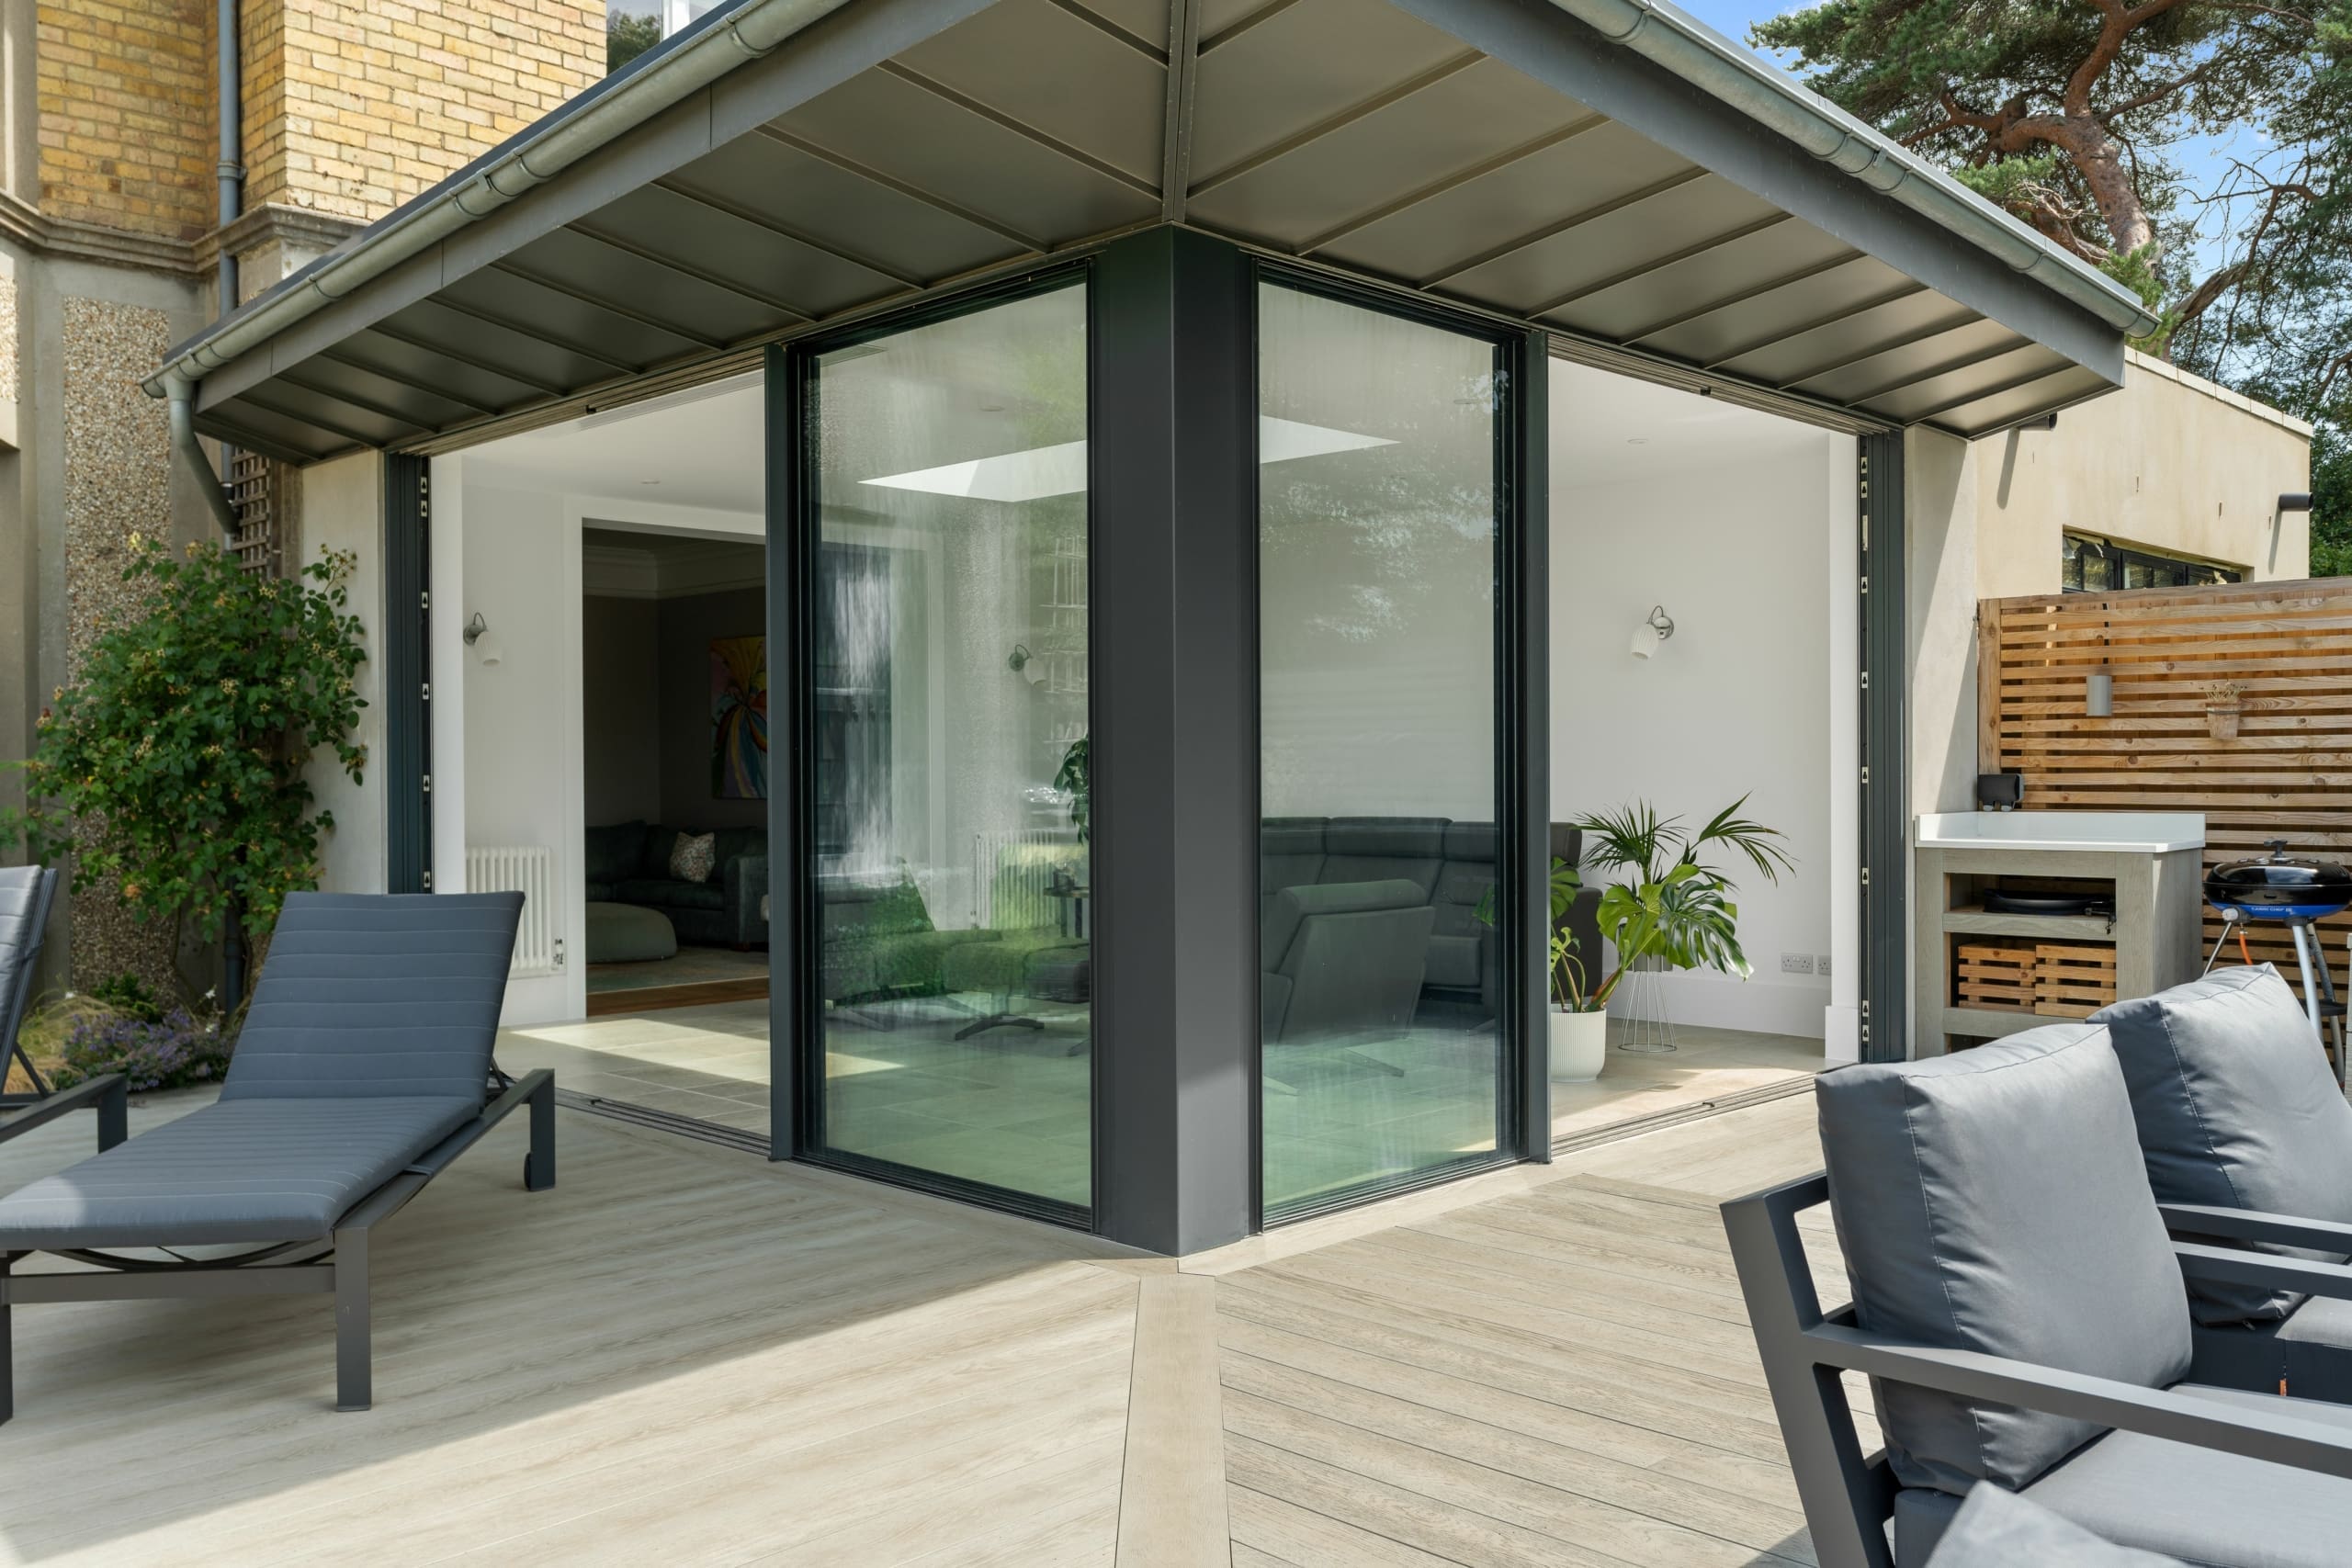 Beautiful sliding external aluminium doors leading to a garden with sun loungers on the decking.